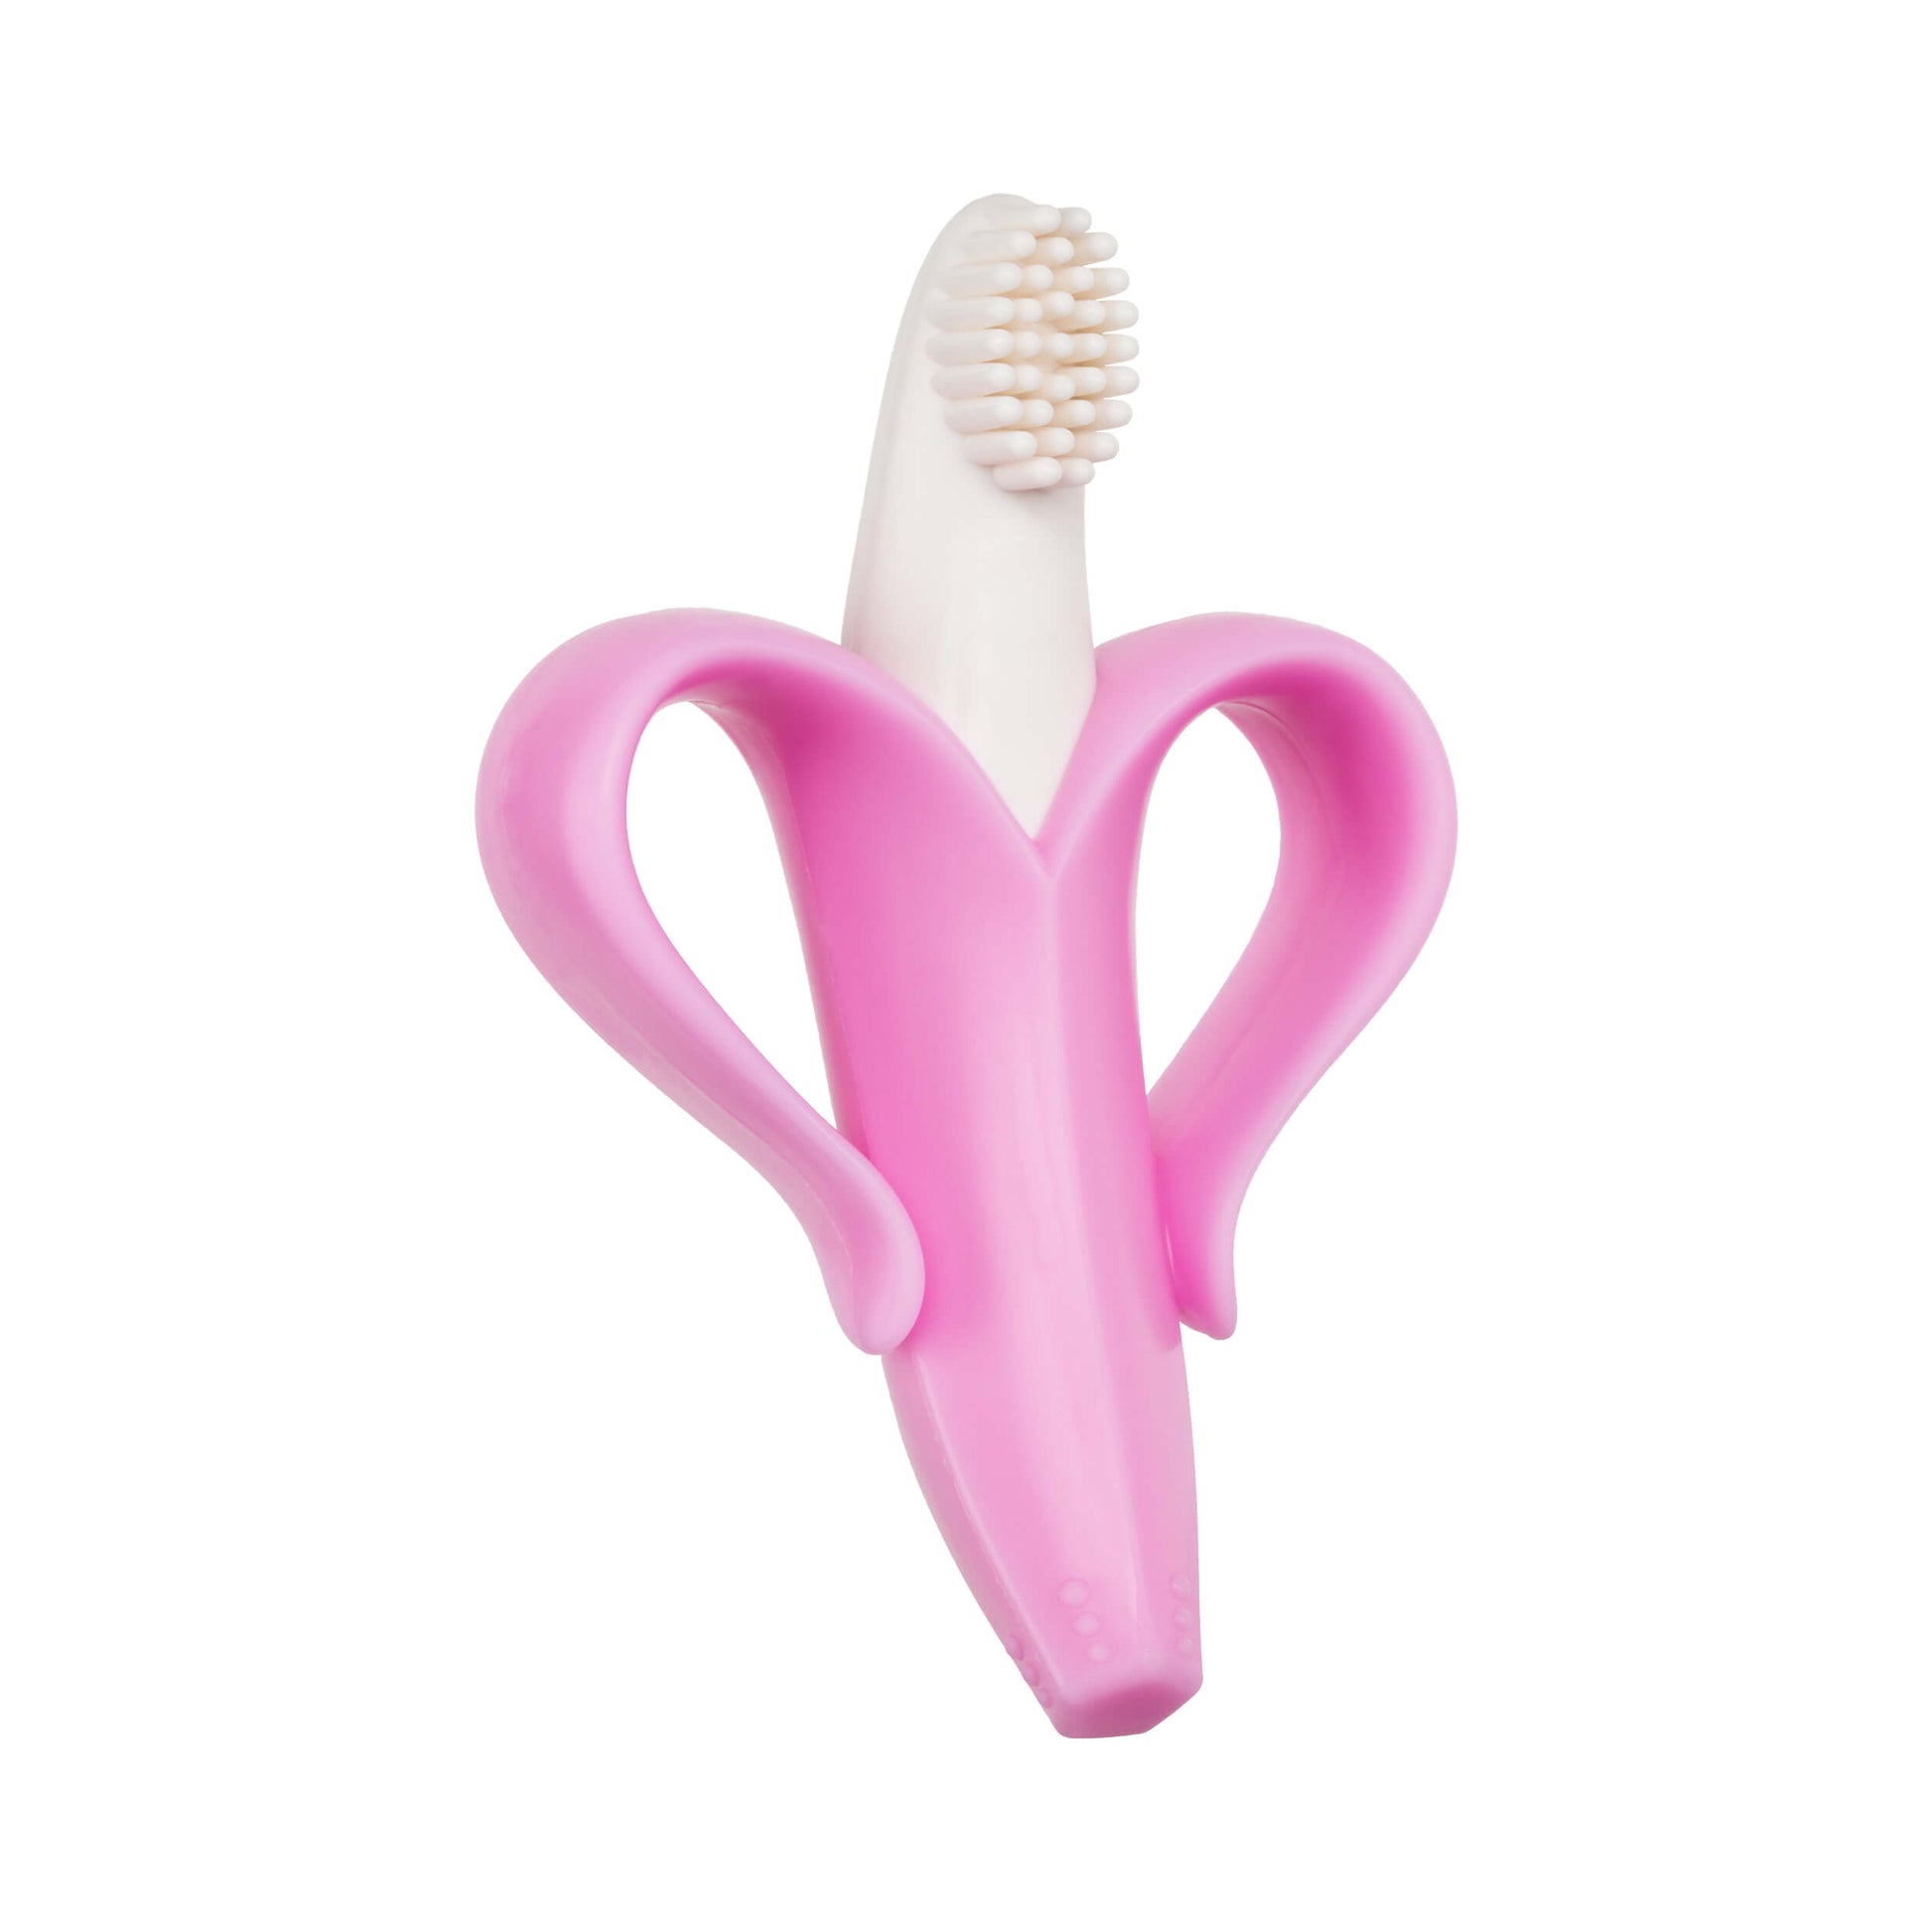 Baby Banana Teething Toothbrush for Infants Pink